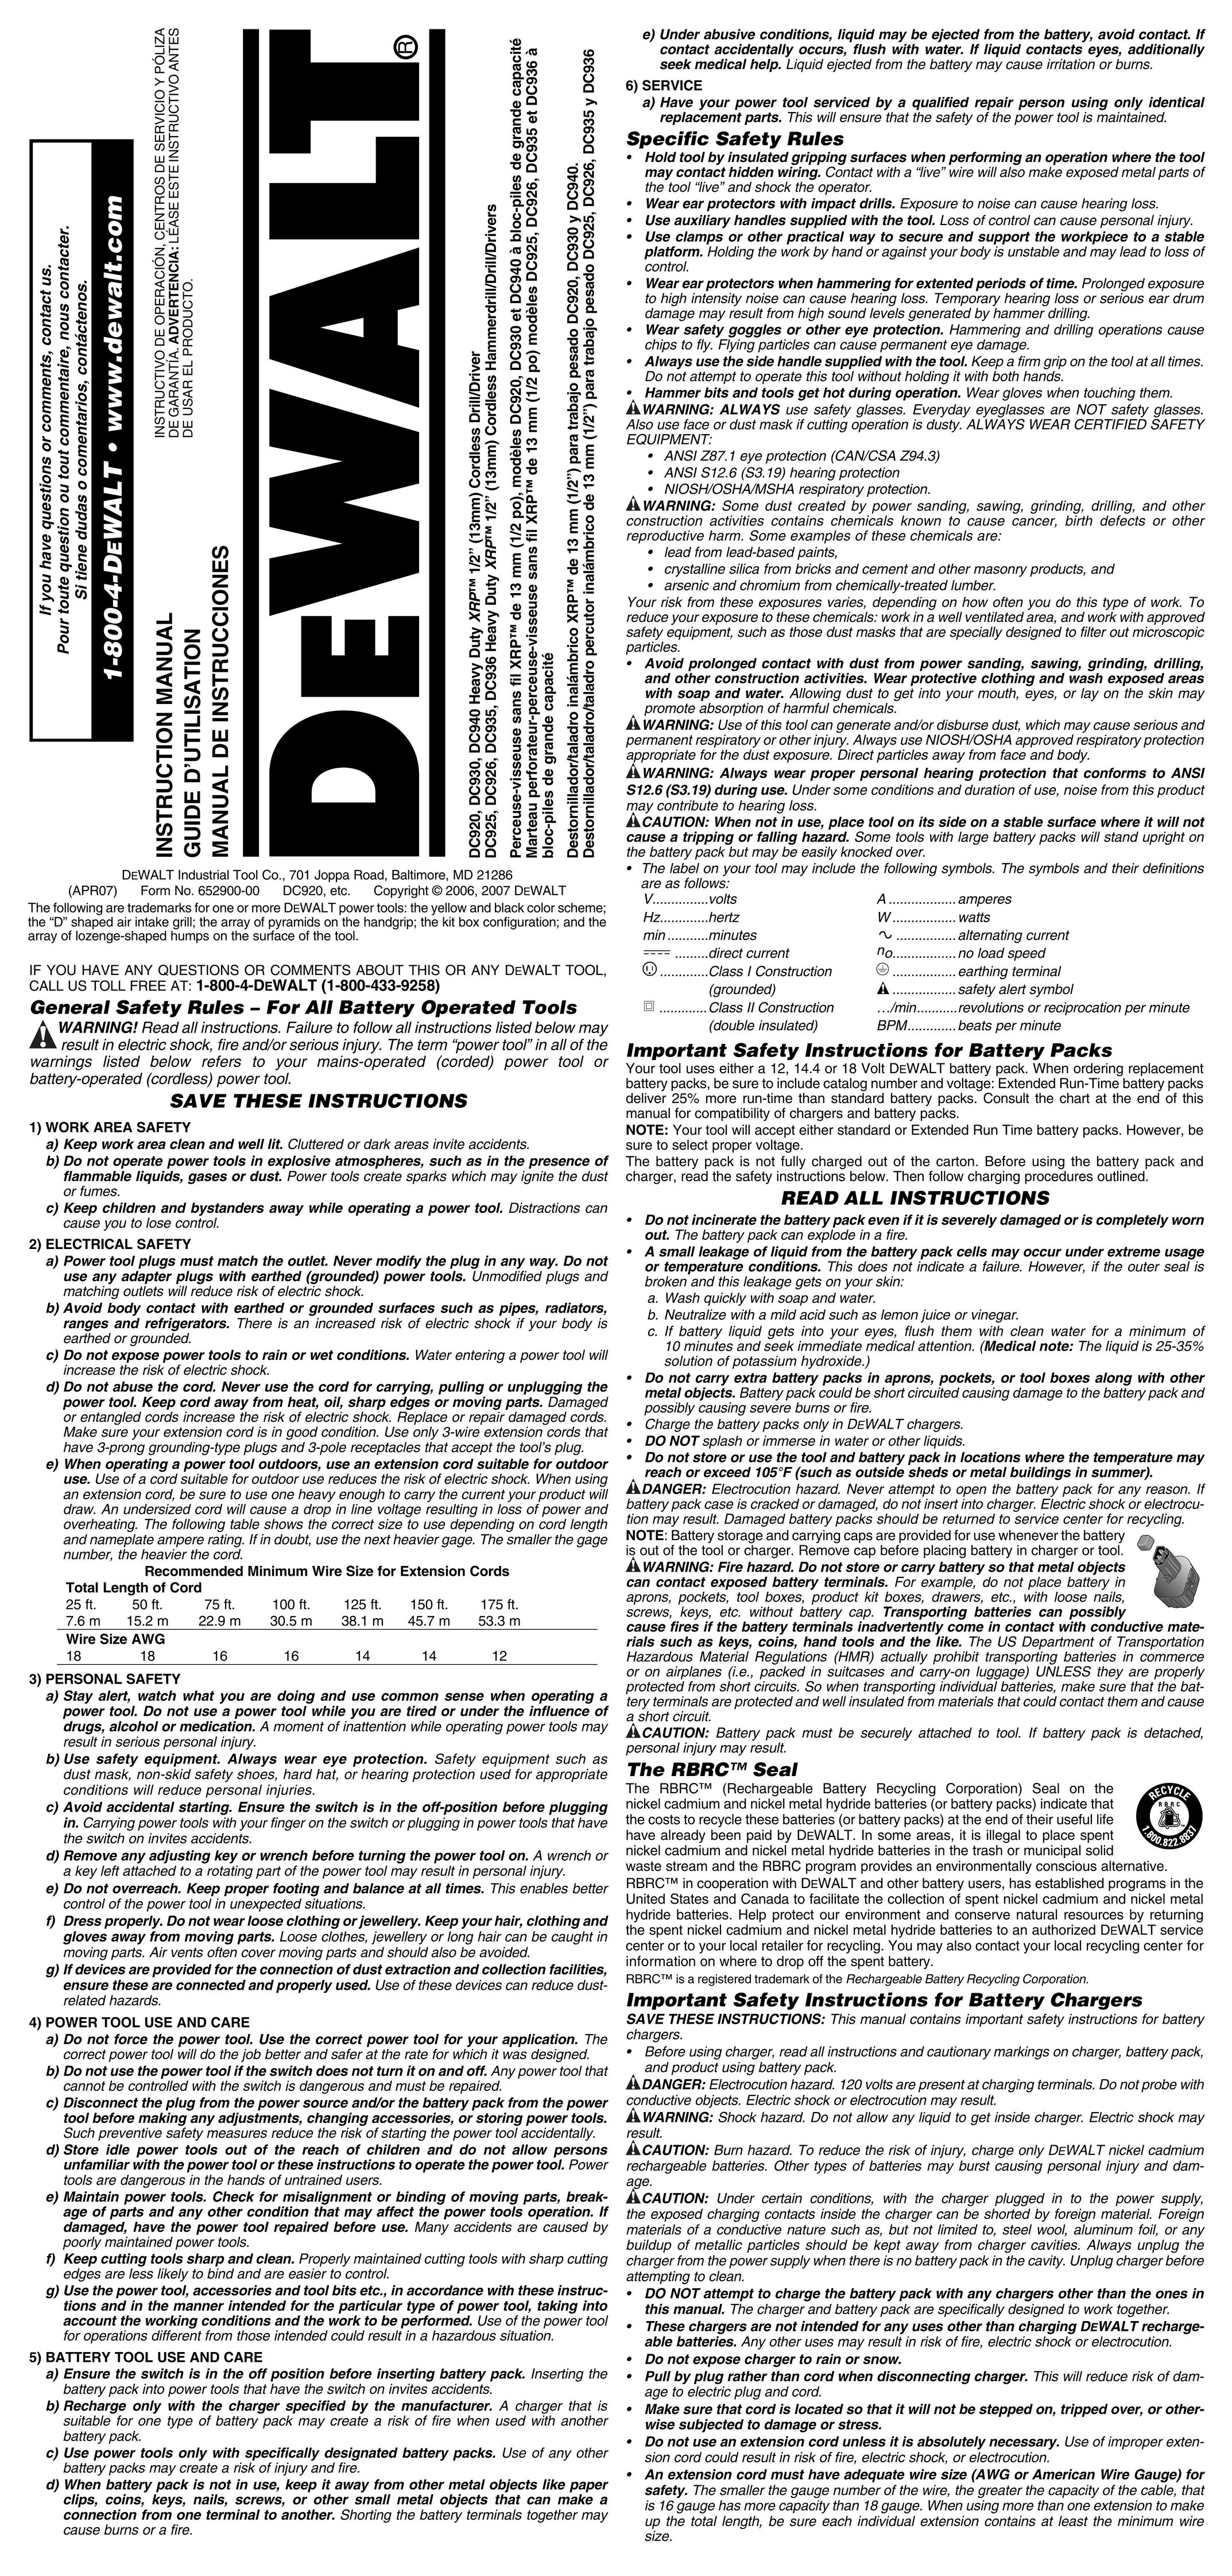 DeWalt DC940 Cordless Drill User Manual